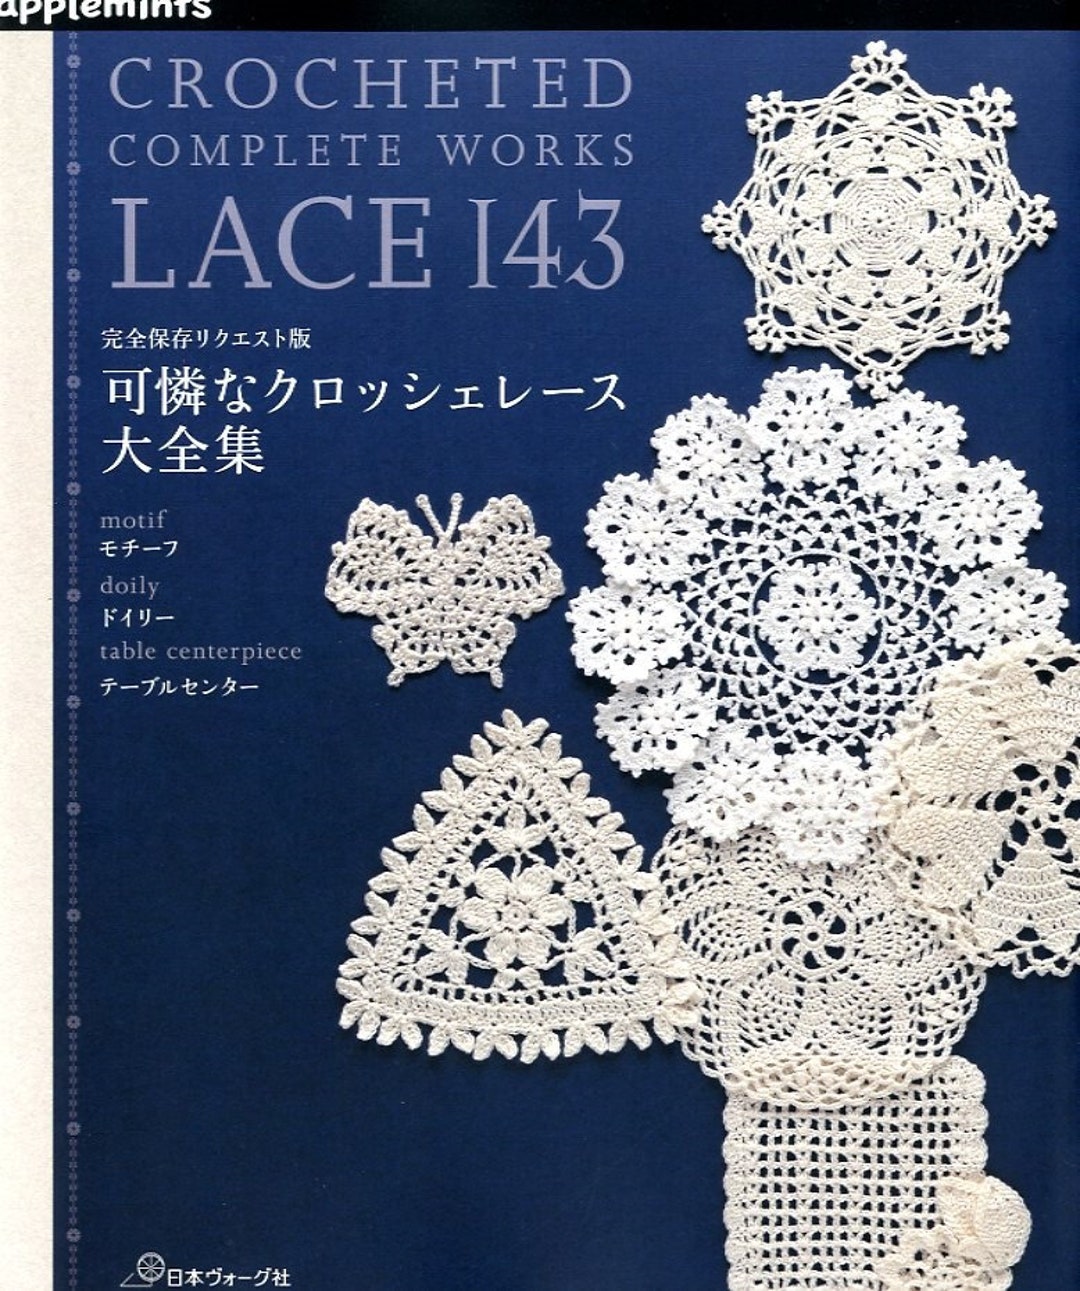 210 Crochet & Lace Books ideas  lace making, crochet, crochet books